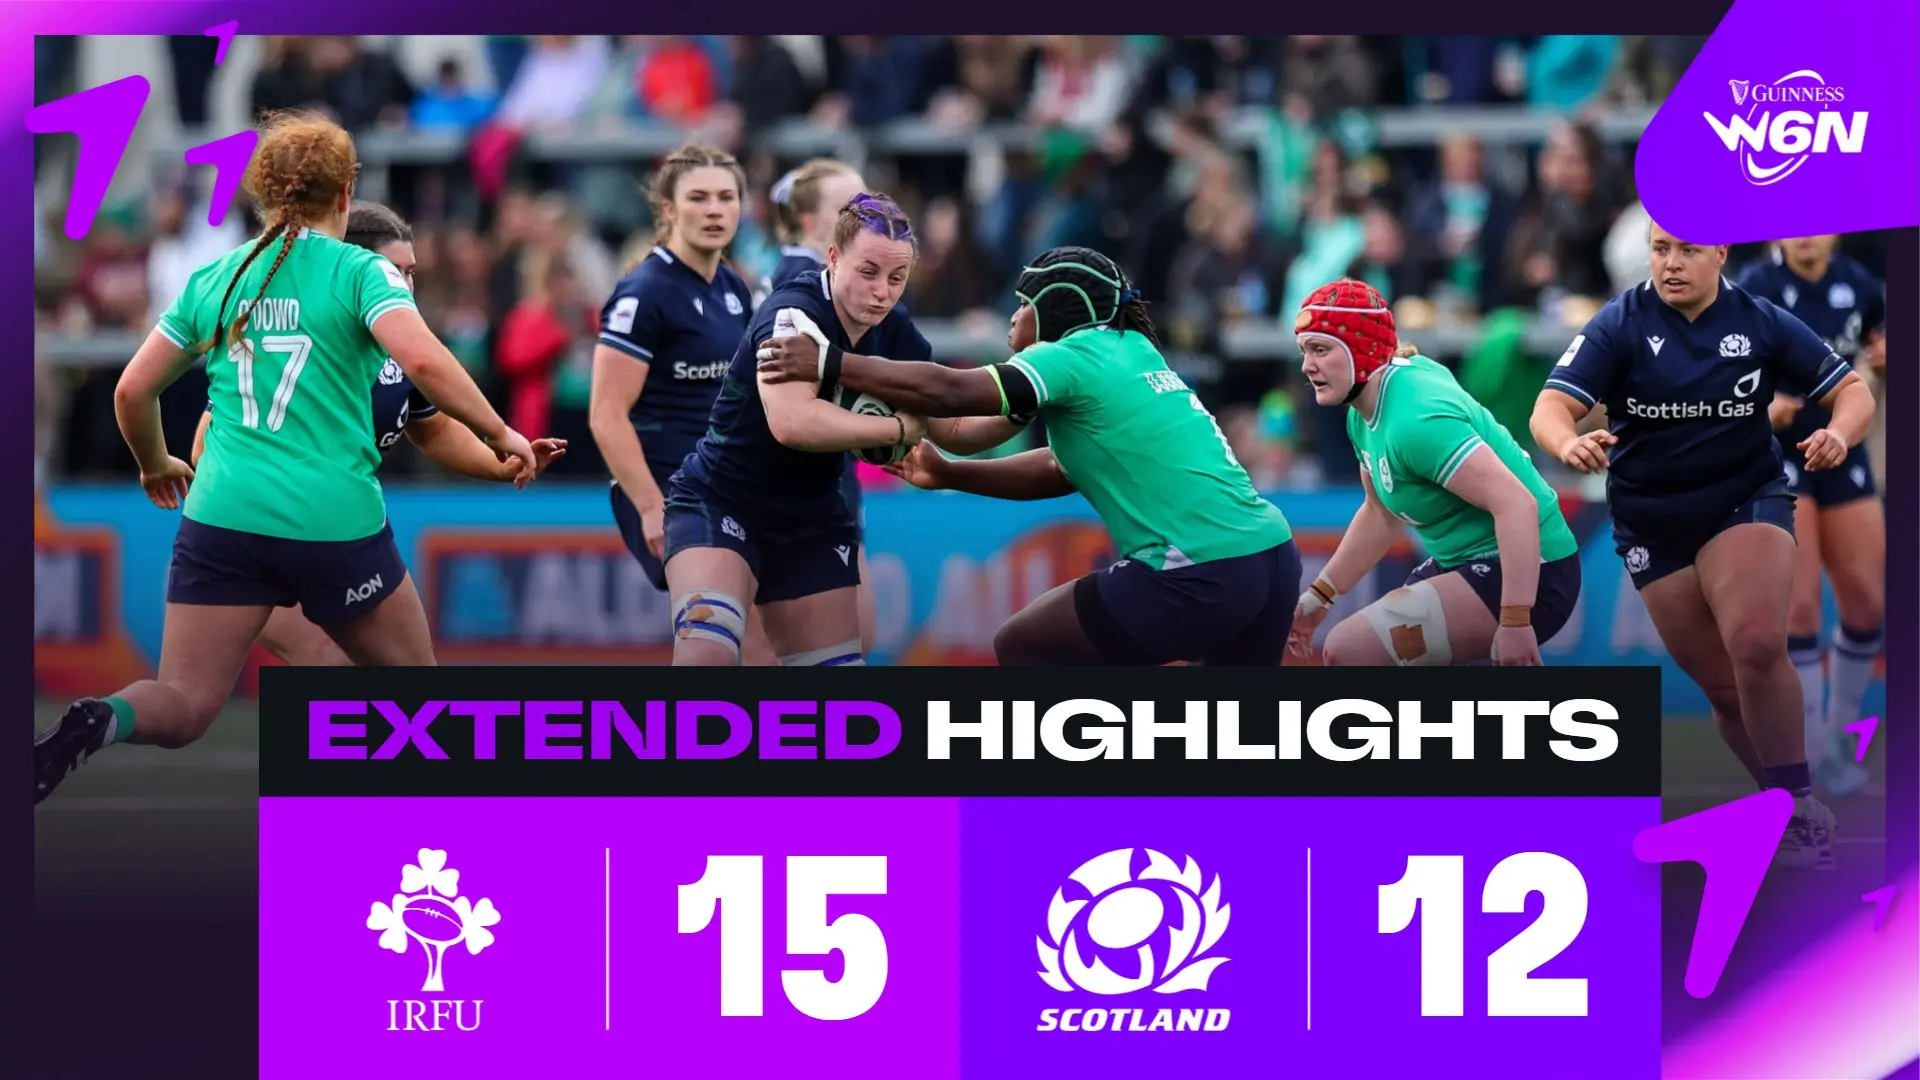 Ireland v Scotland - Extended Highlights - Thumb